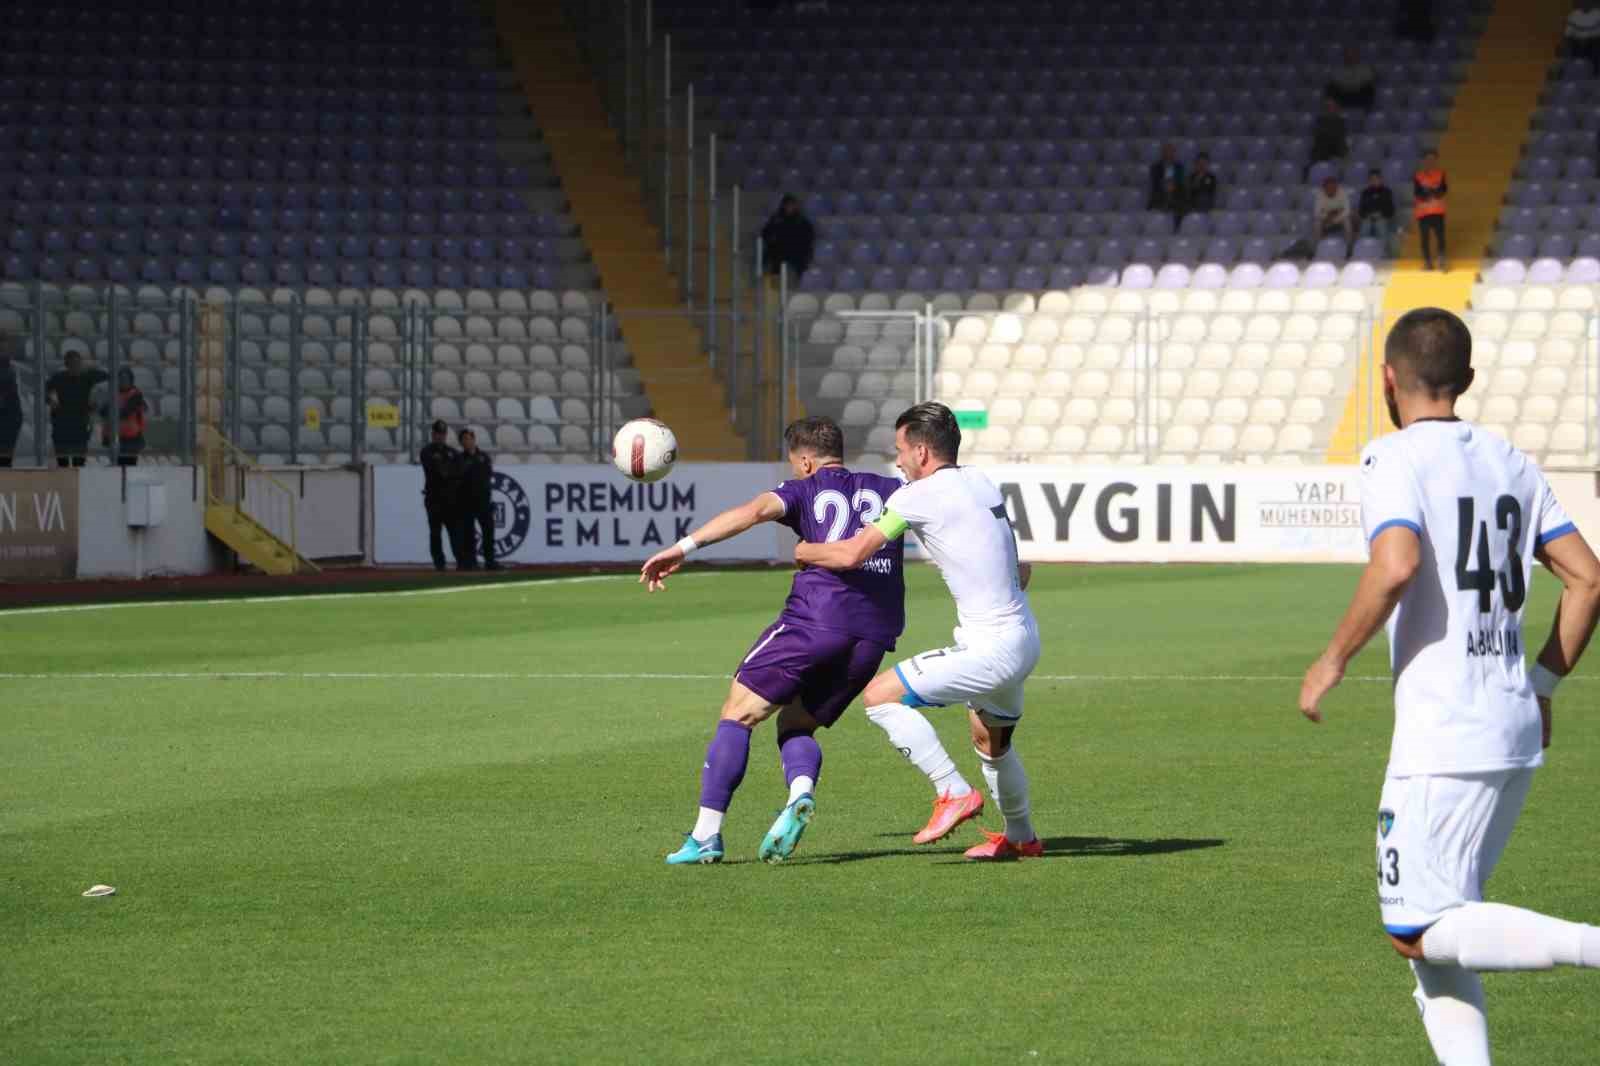 TFF 2. Lig: Afyonspor: 1 - Karacabey Belediyespor: 0